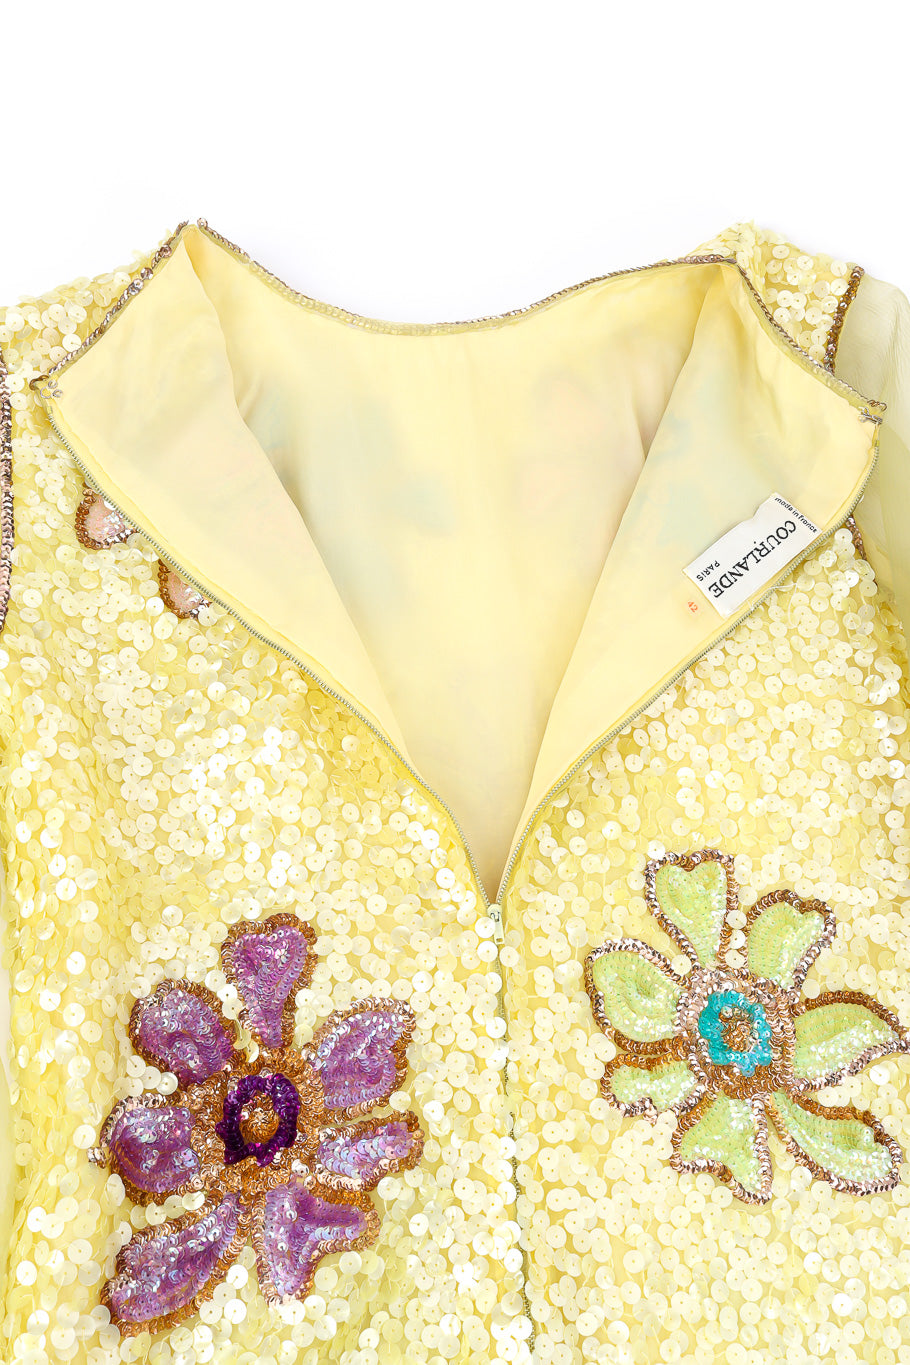 Vintage Courlande Silk Organza Flower Sequin Dress back view unzipped closeup @Recessla